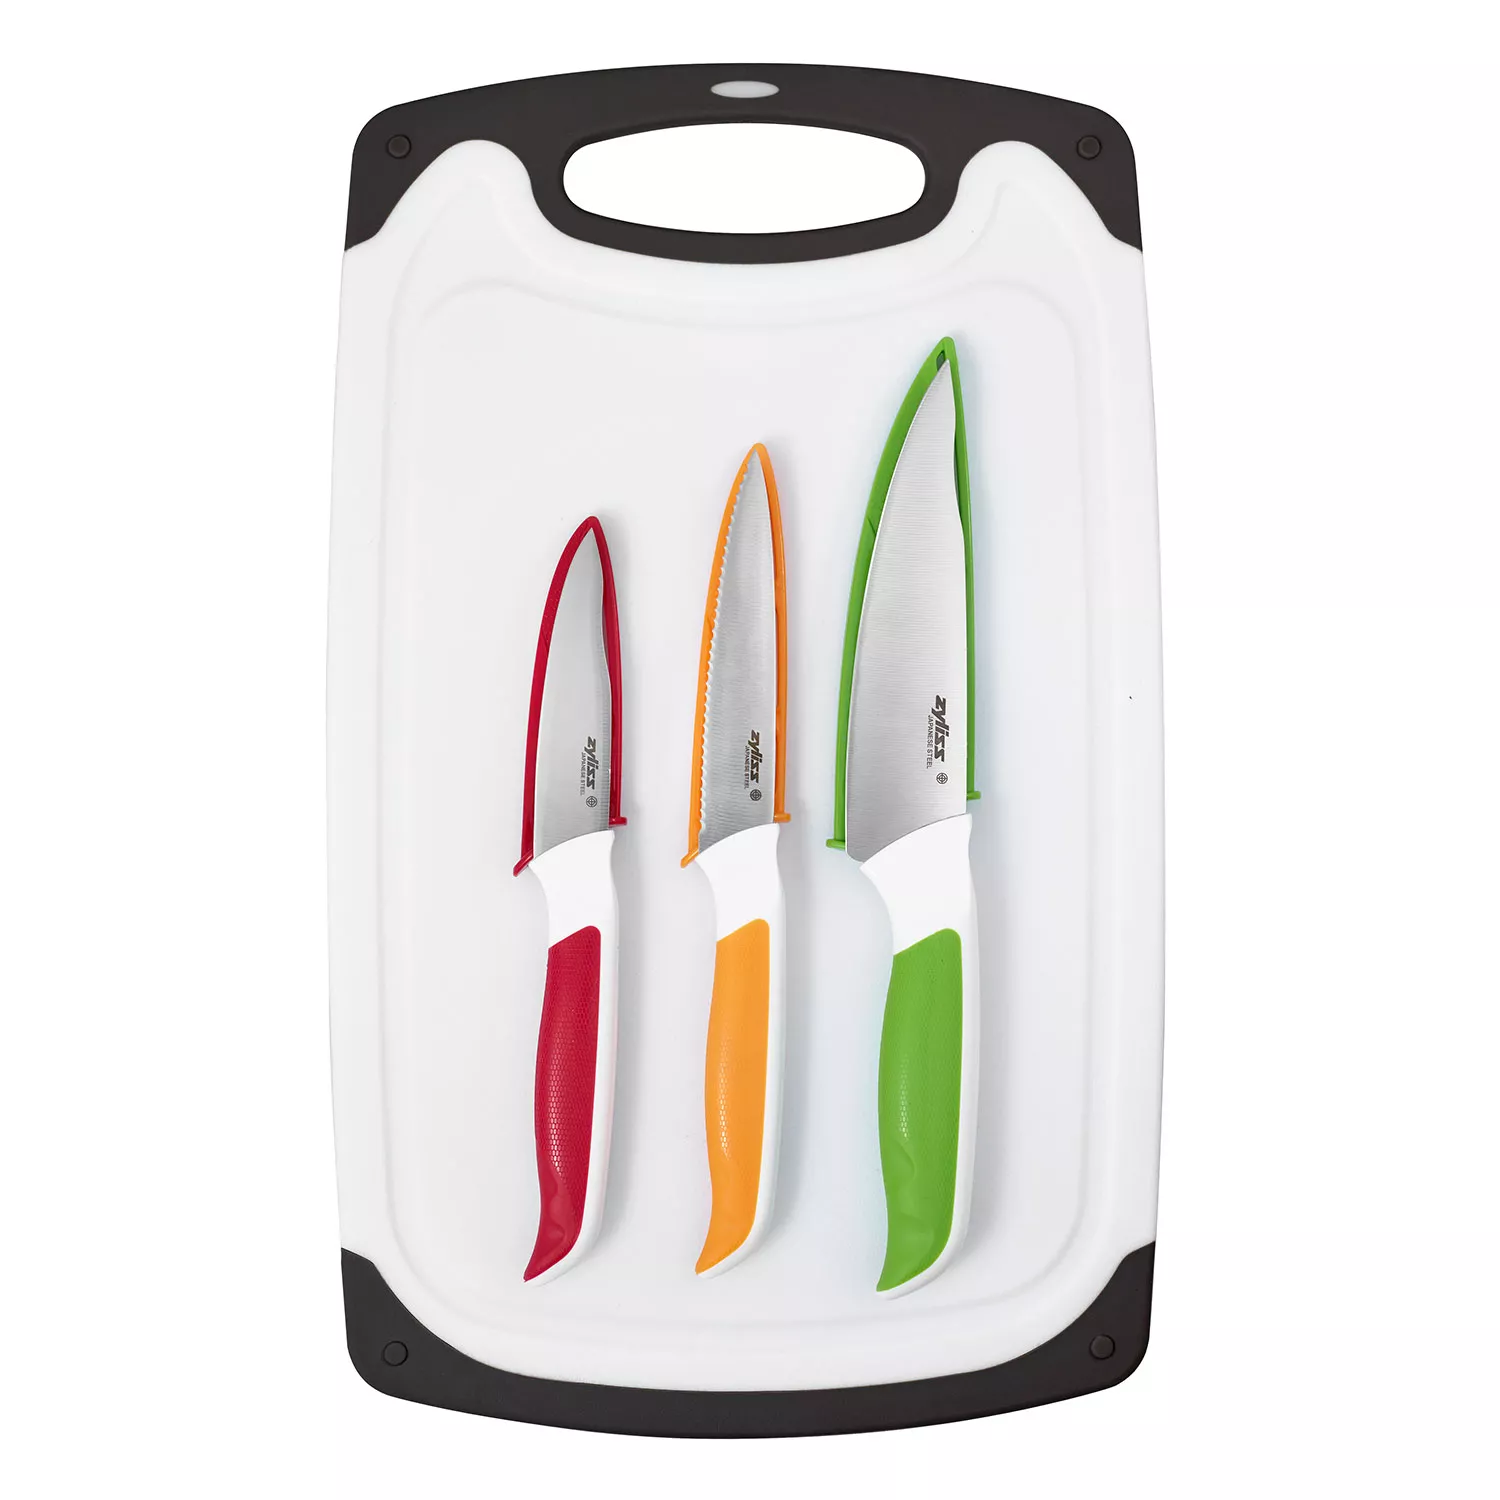 KitchenAid 3-Piece Japanese Knife Set with Blade Covers, Sharp